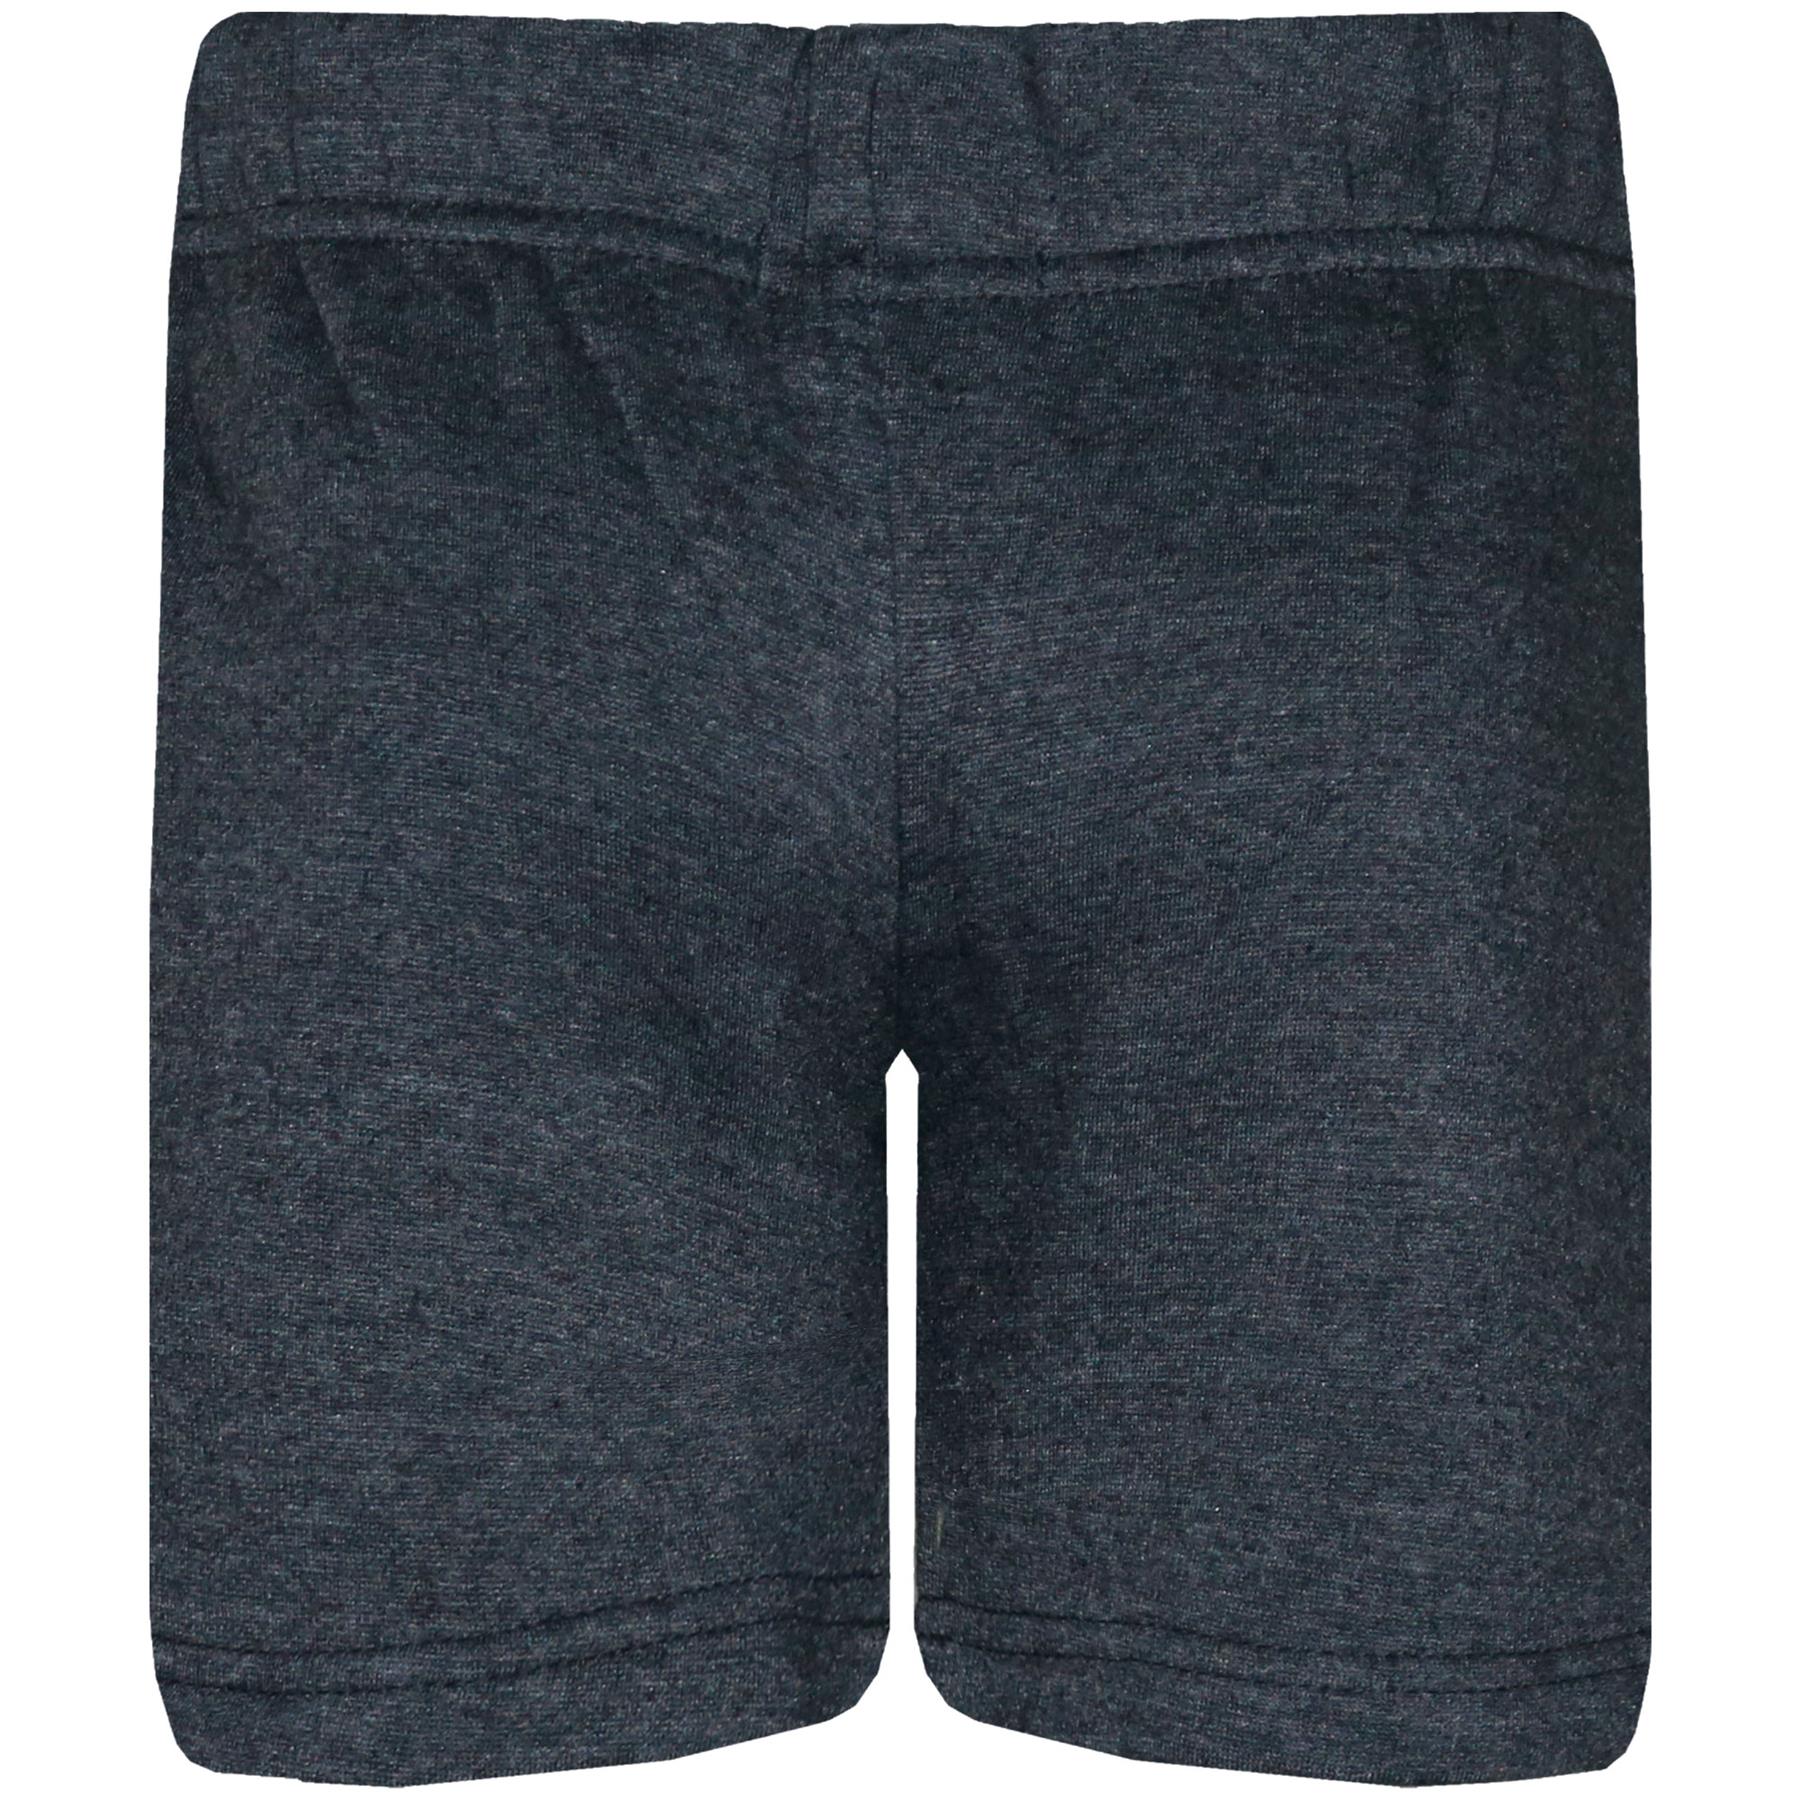 Kids Shorts Girls Boys Chino Shorts Casual Knee Length Half Pant Age 5-13 Years